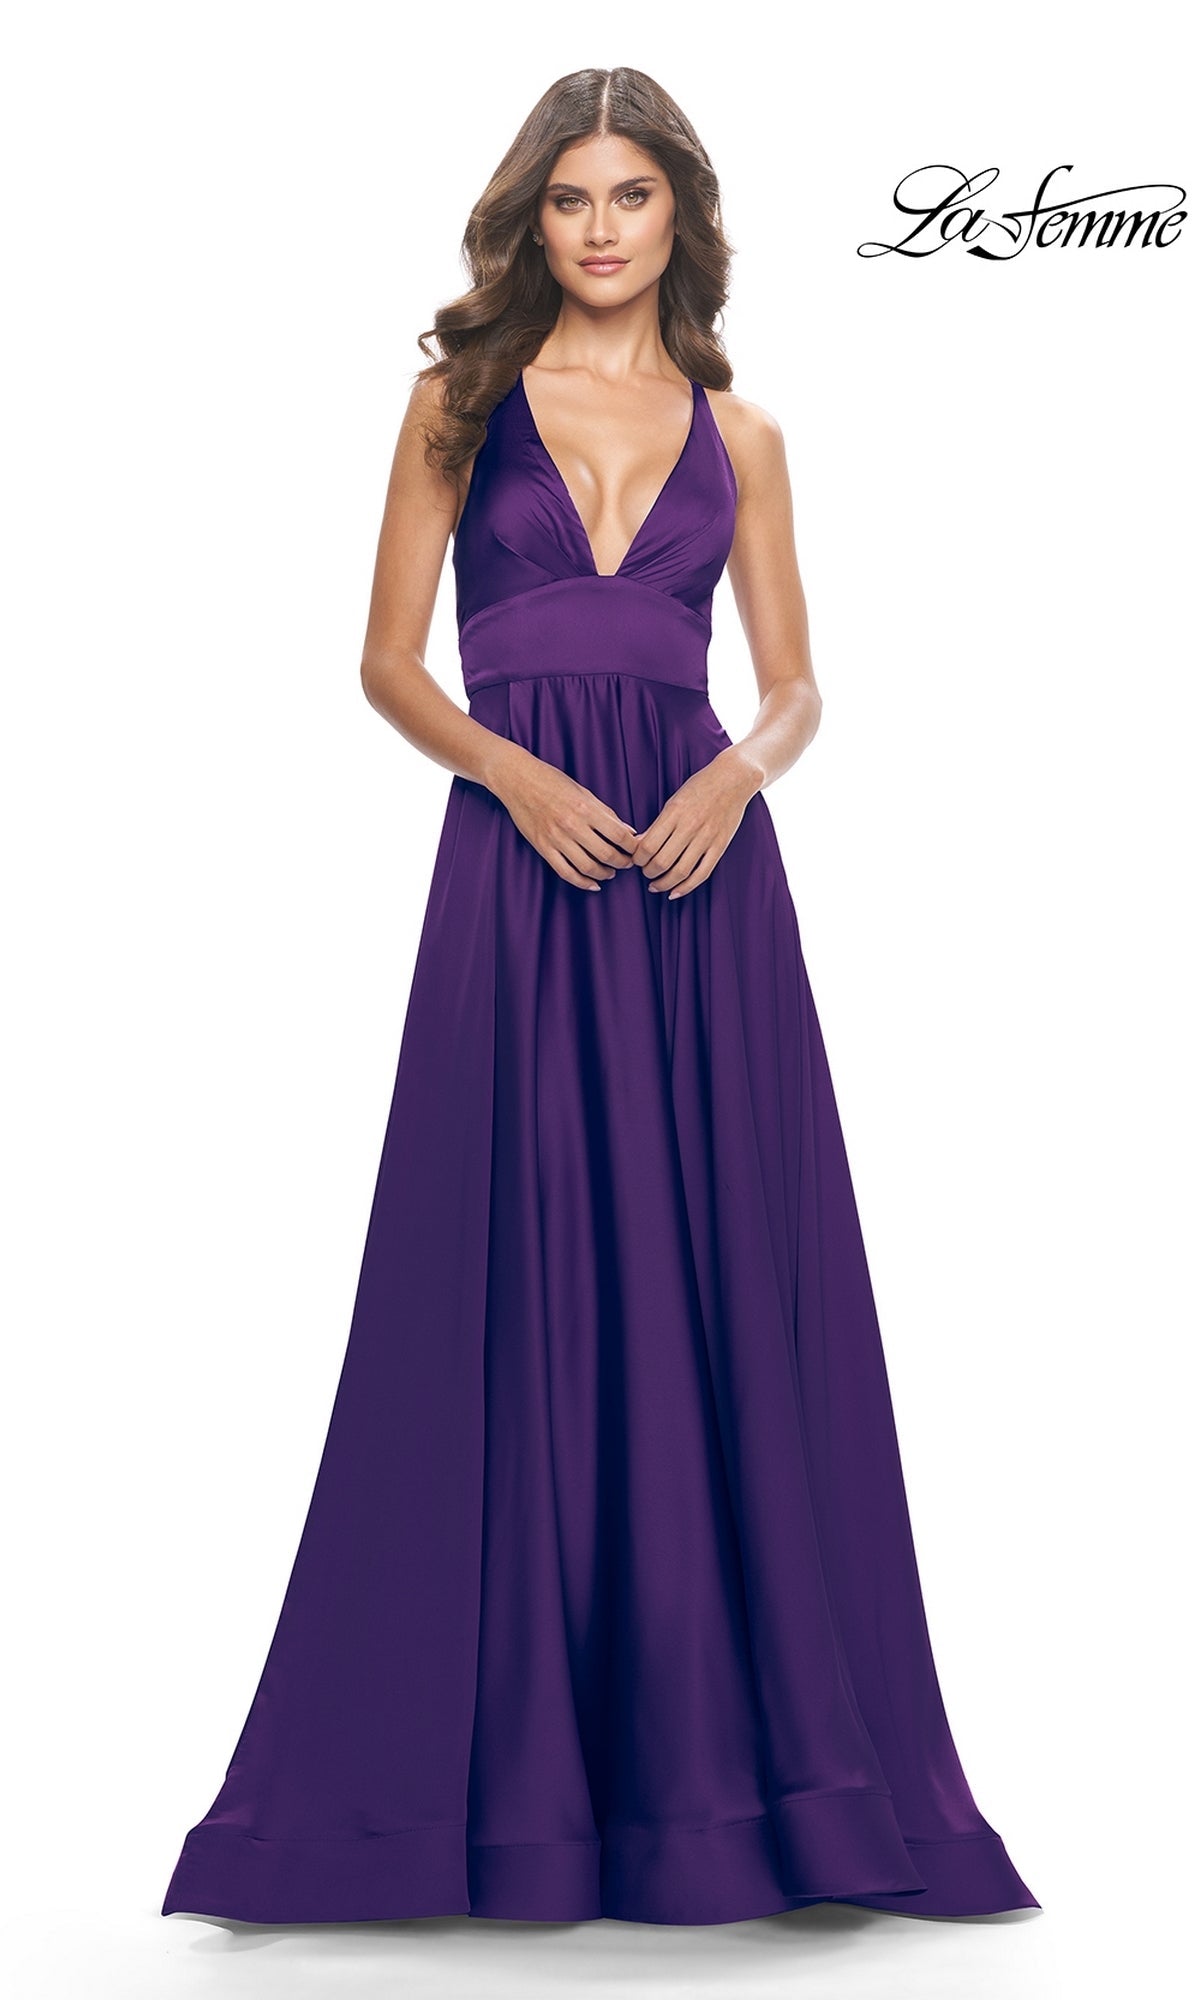  La Femme 31533 Formal Prom Dress